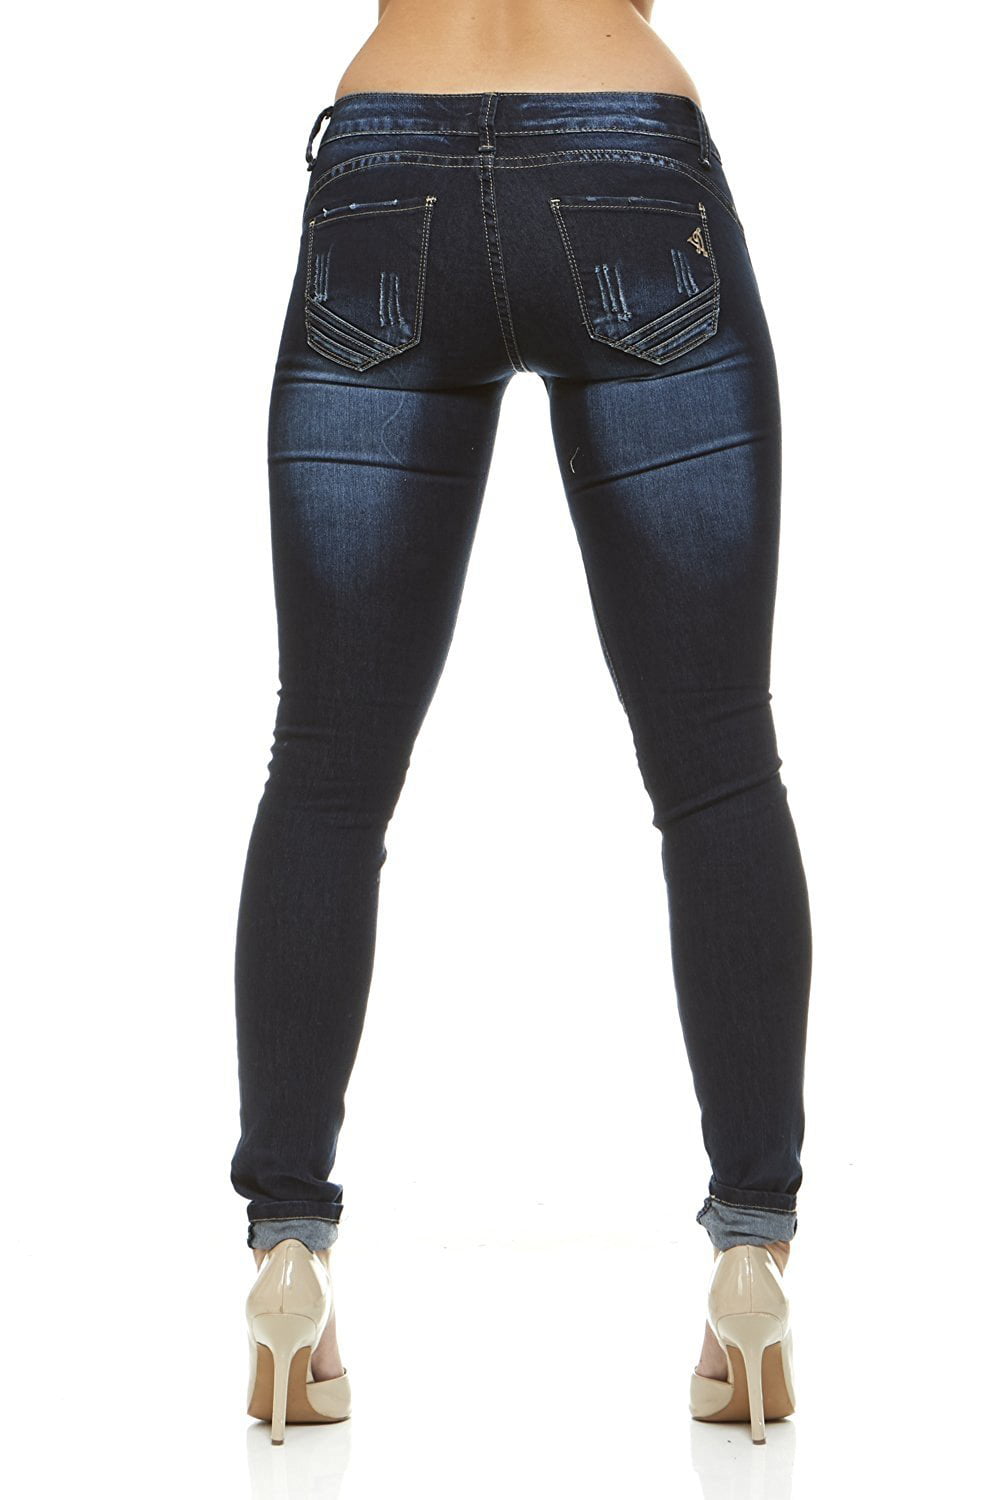 Classic 5 Pocket Slim Fit Skinny Stretch Jeans For Women Plus Size 4 ...